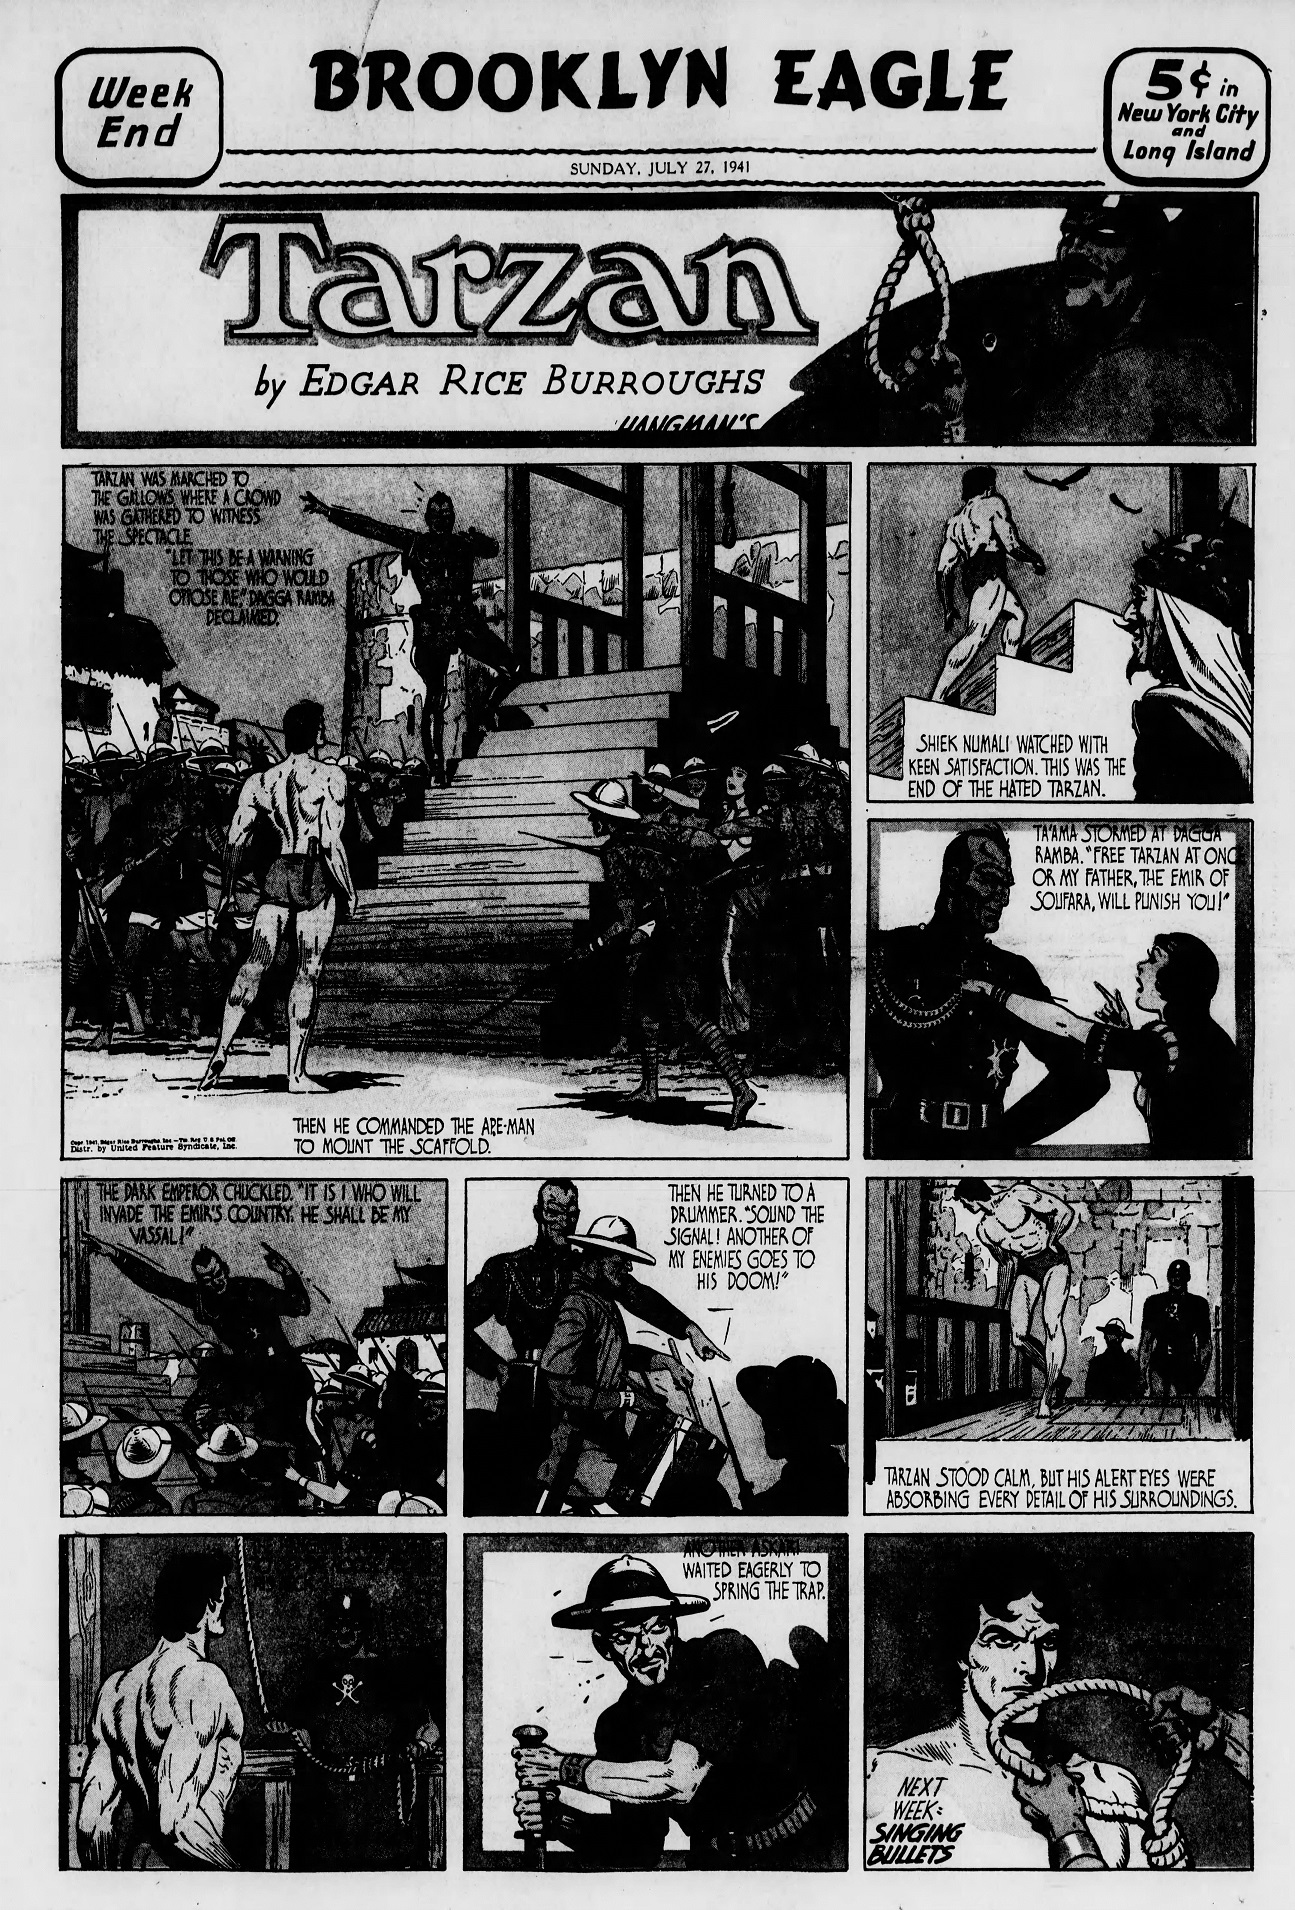 The_Brooklyn_Daily_Eagle_Sun__Jul_27__1941_(3).jpg